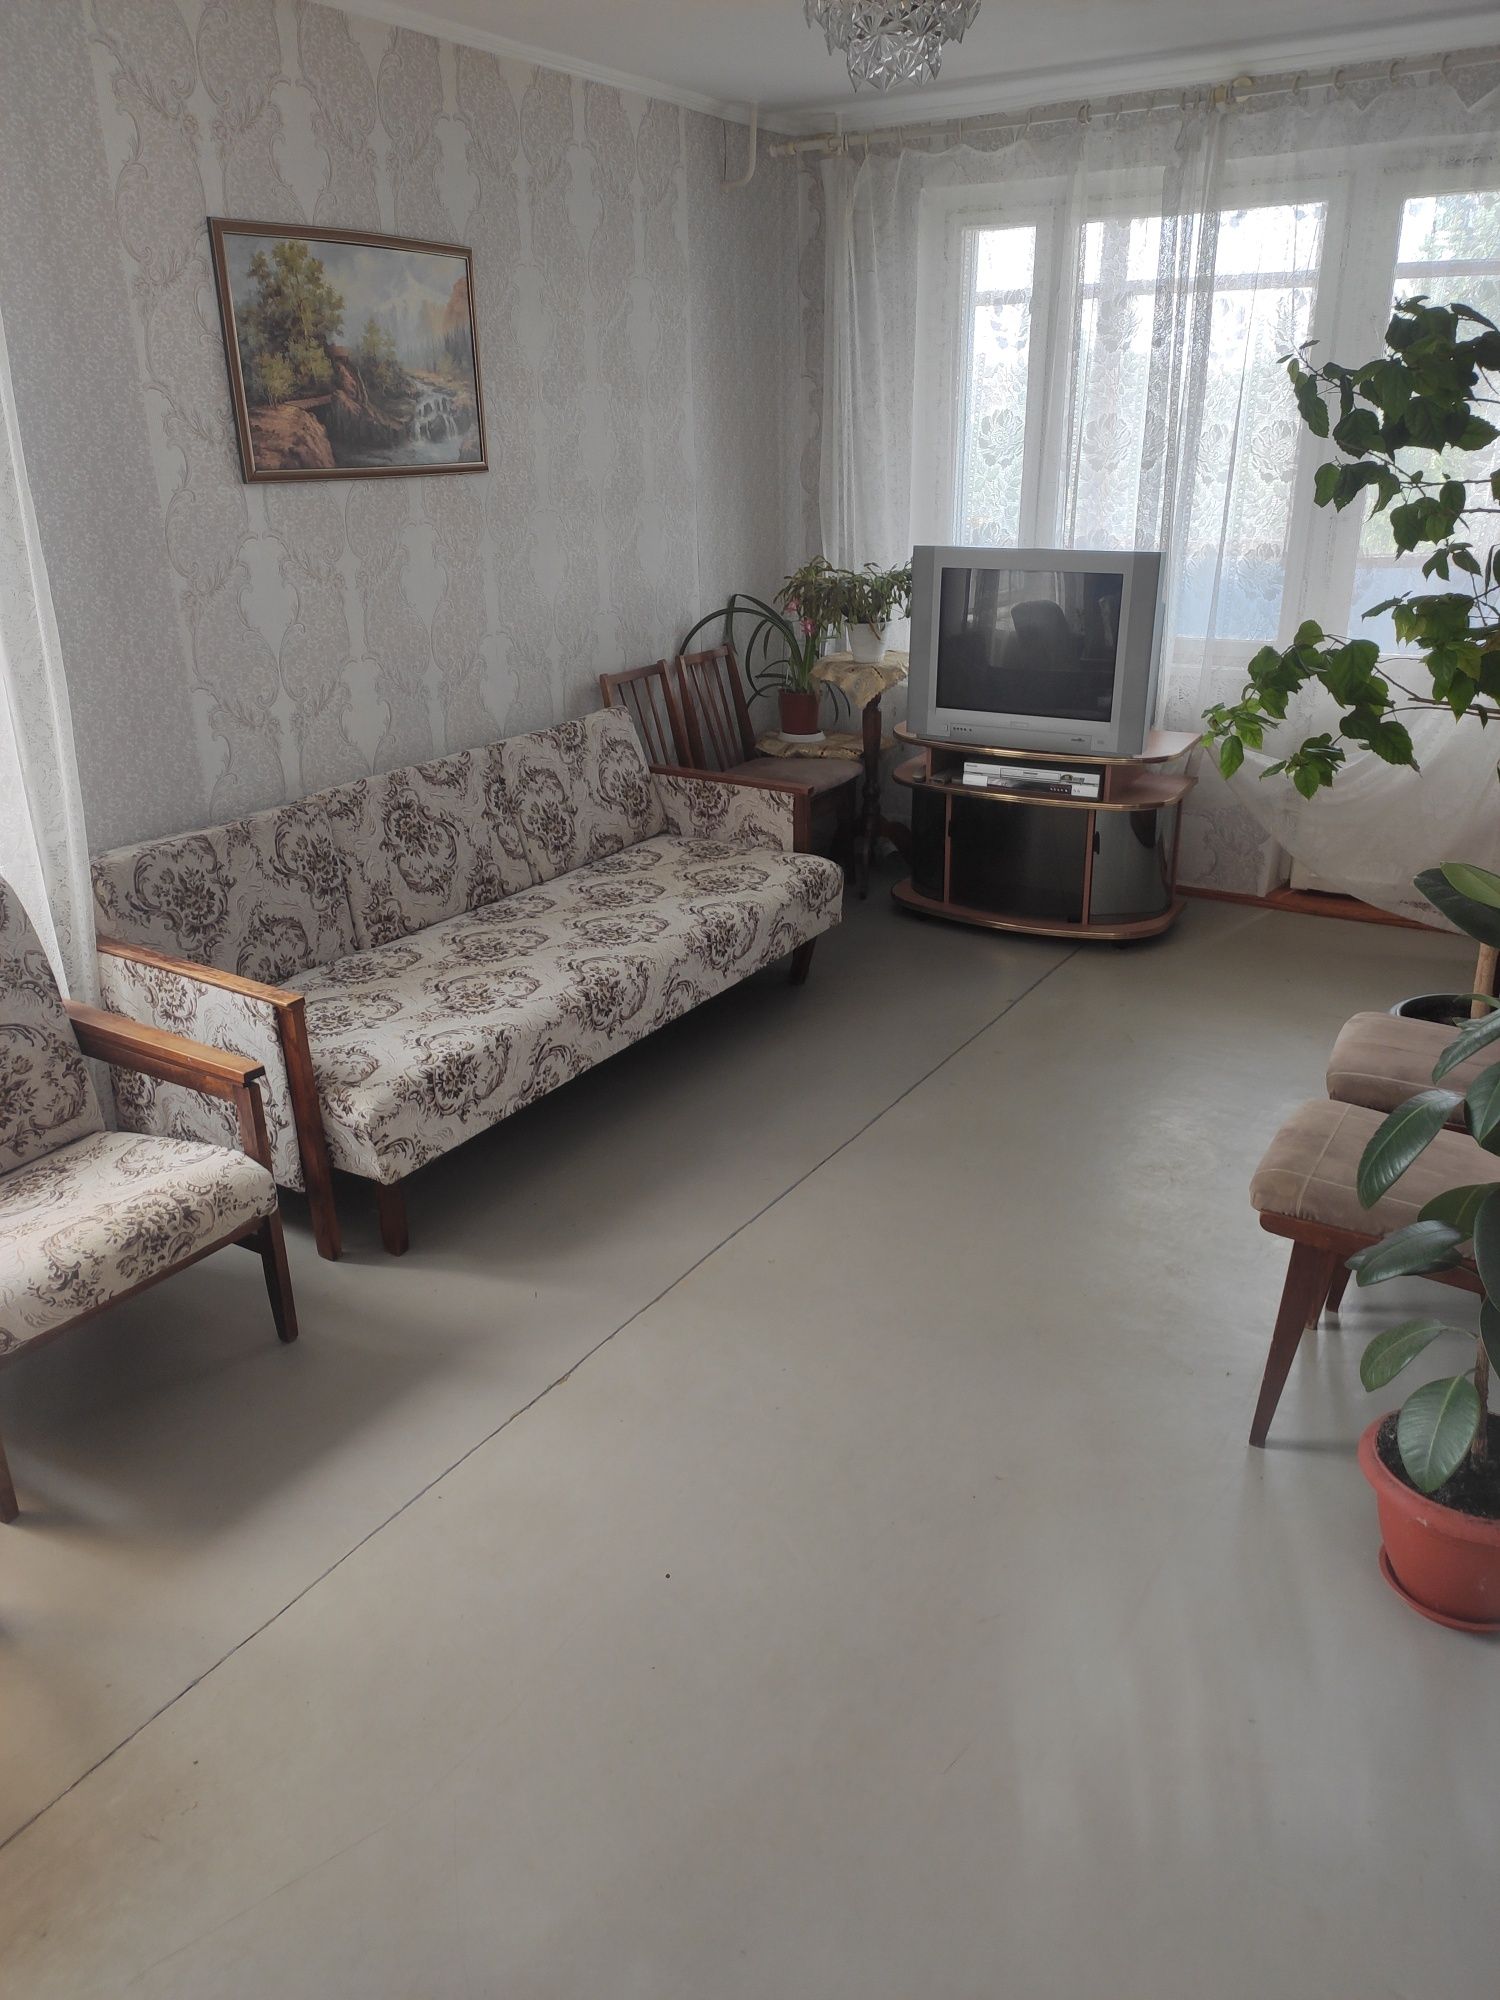 Сдается трёхкомнатная квартира на проспекте Мира, Васляева